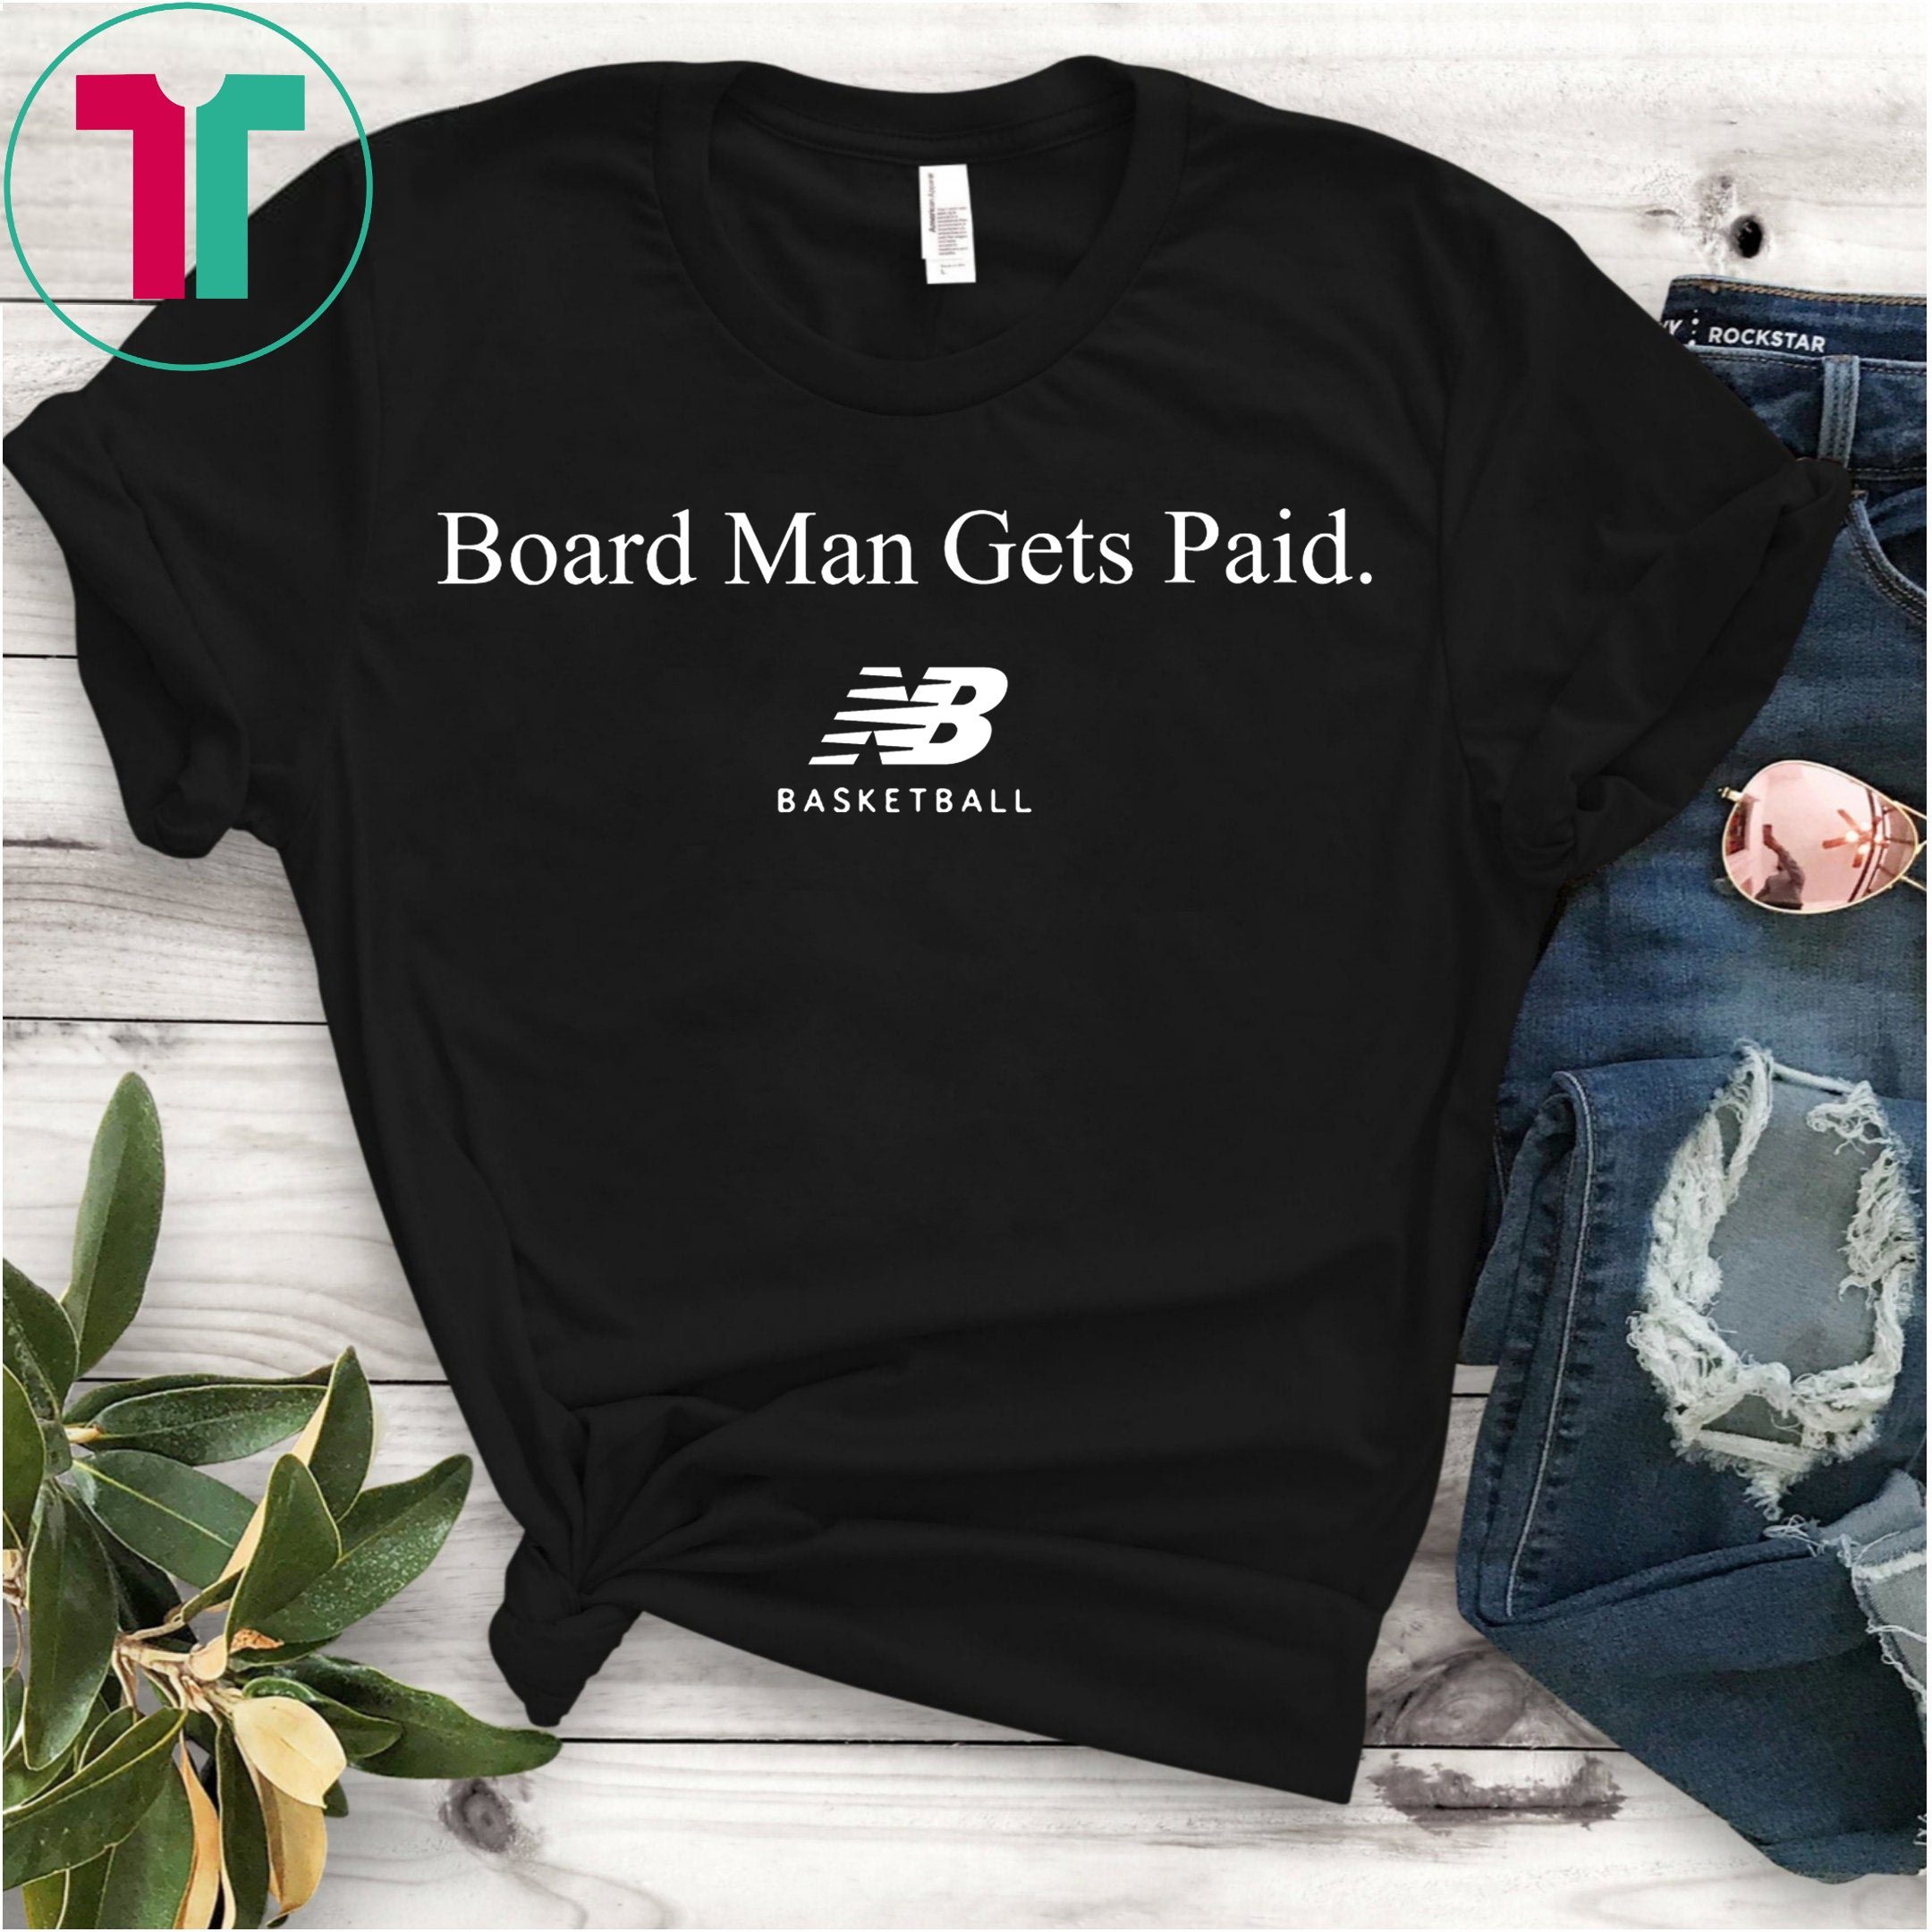 board man gets paid new balance t shirt